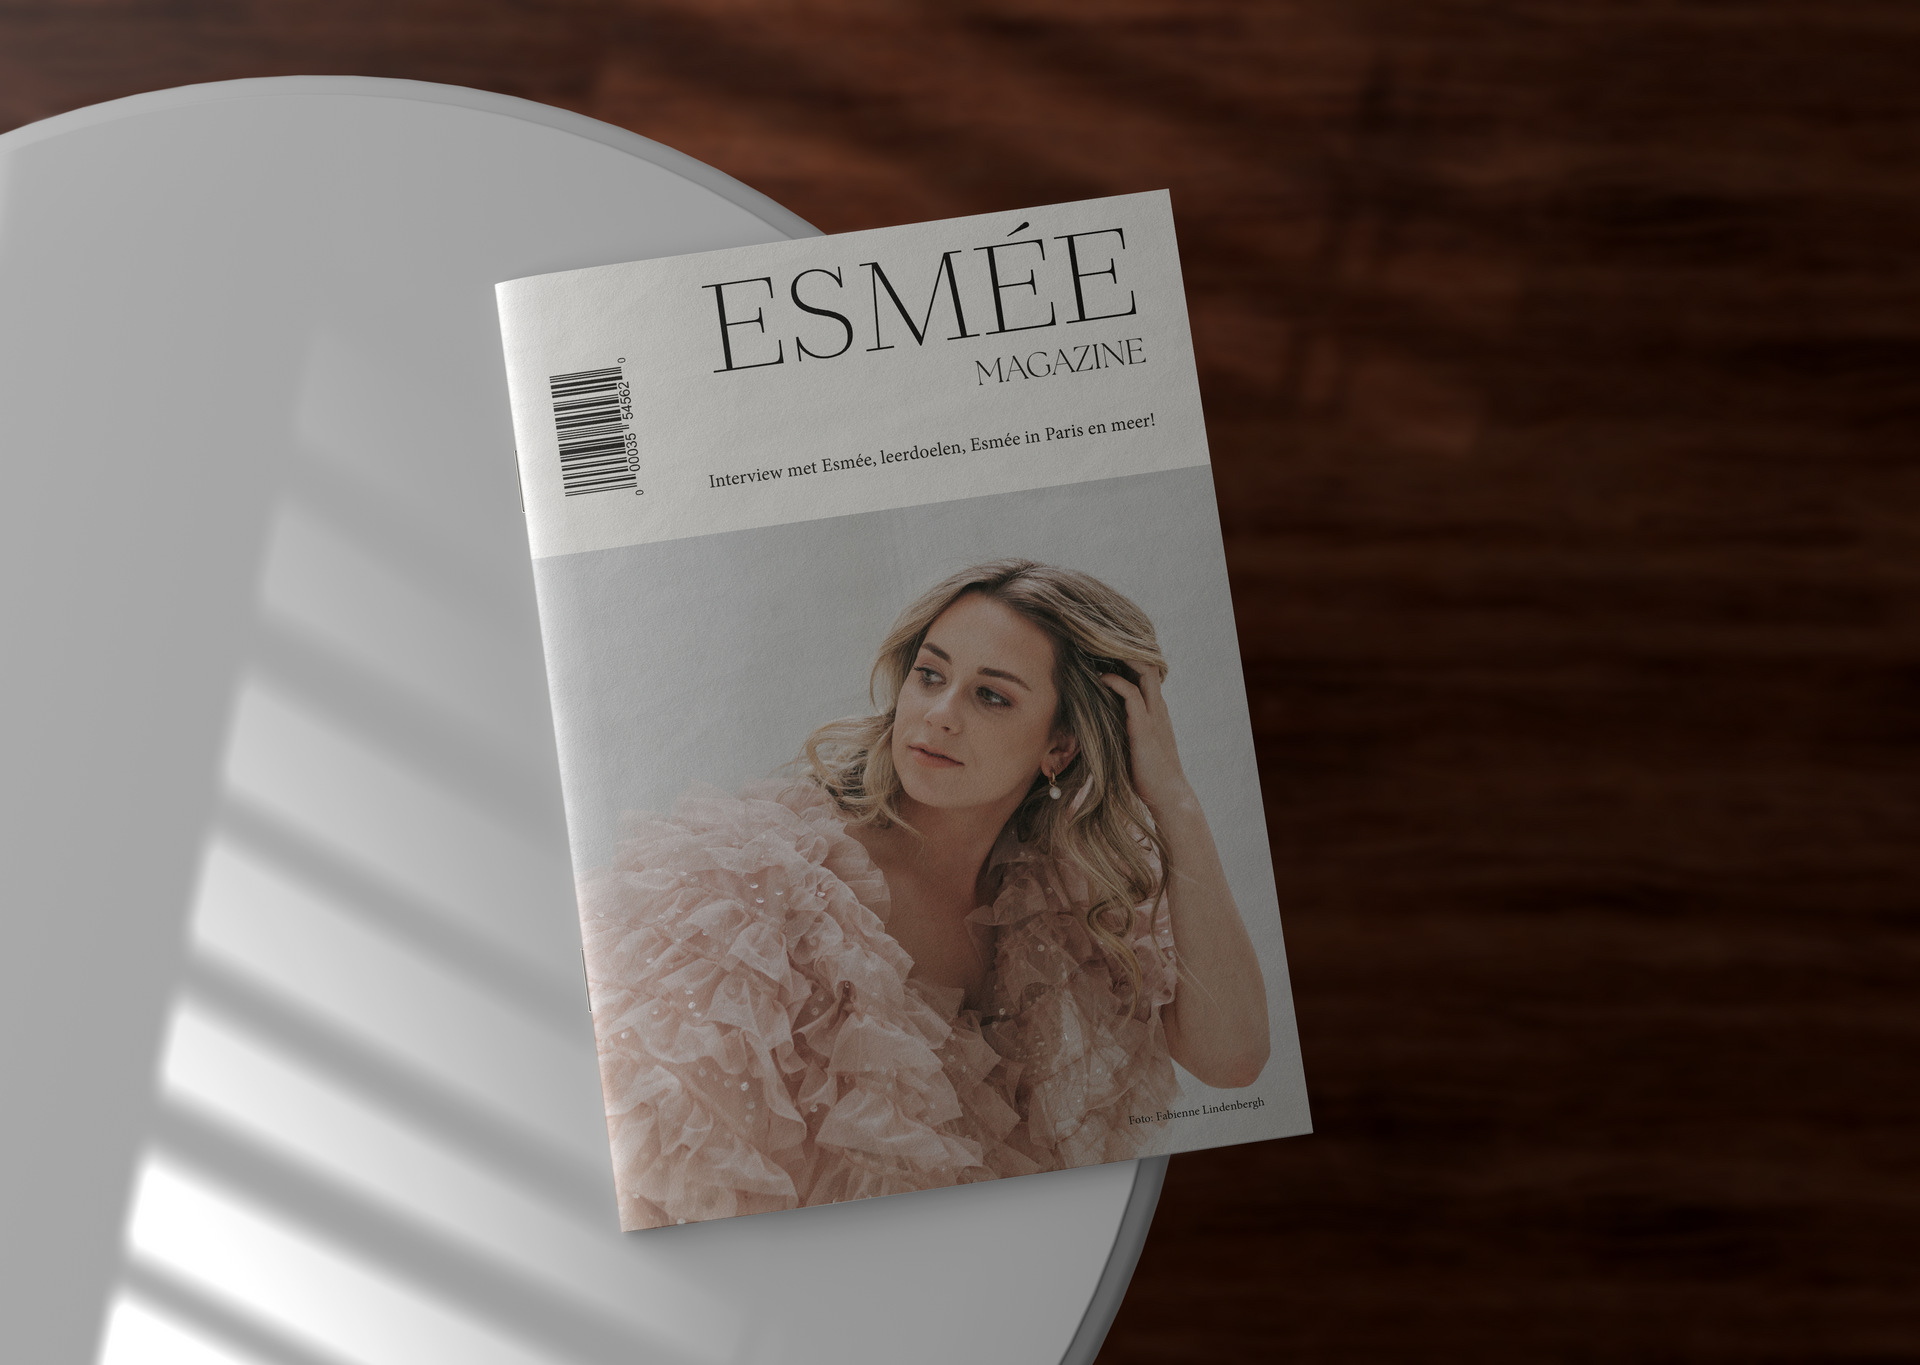 Magazine Esmee van Loon